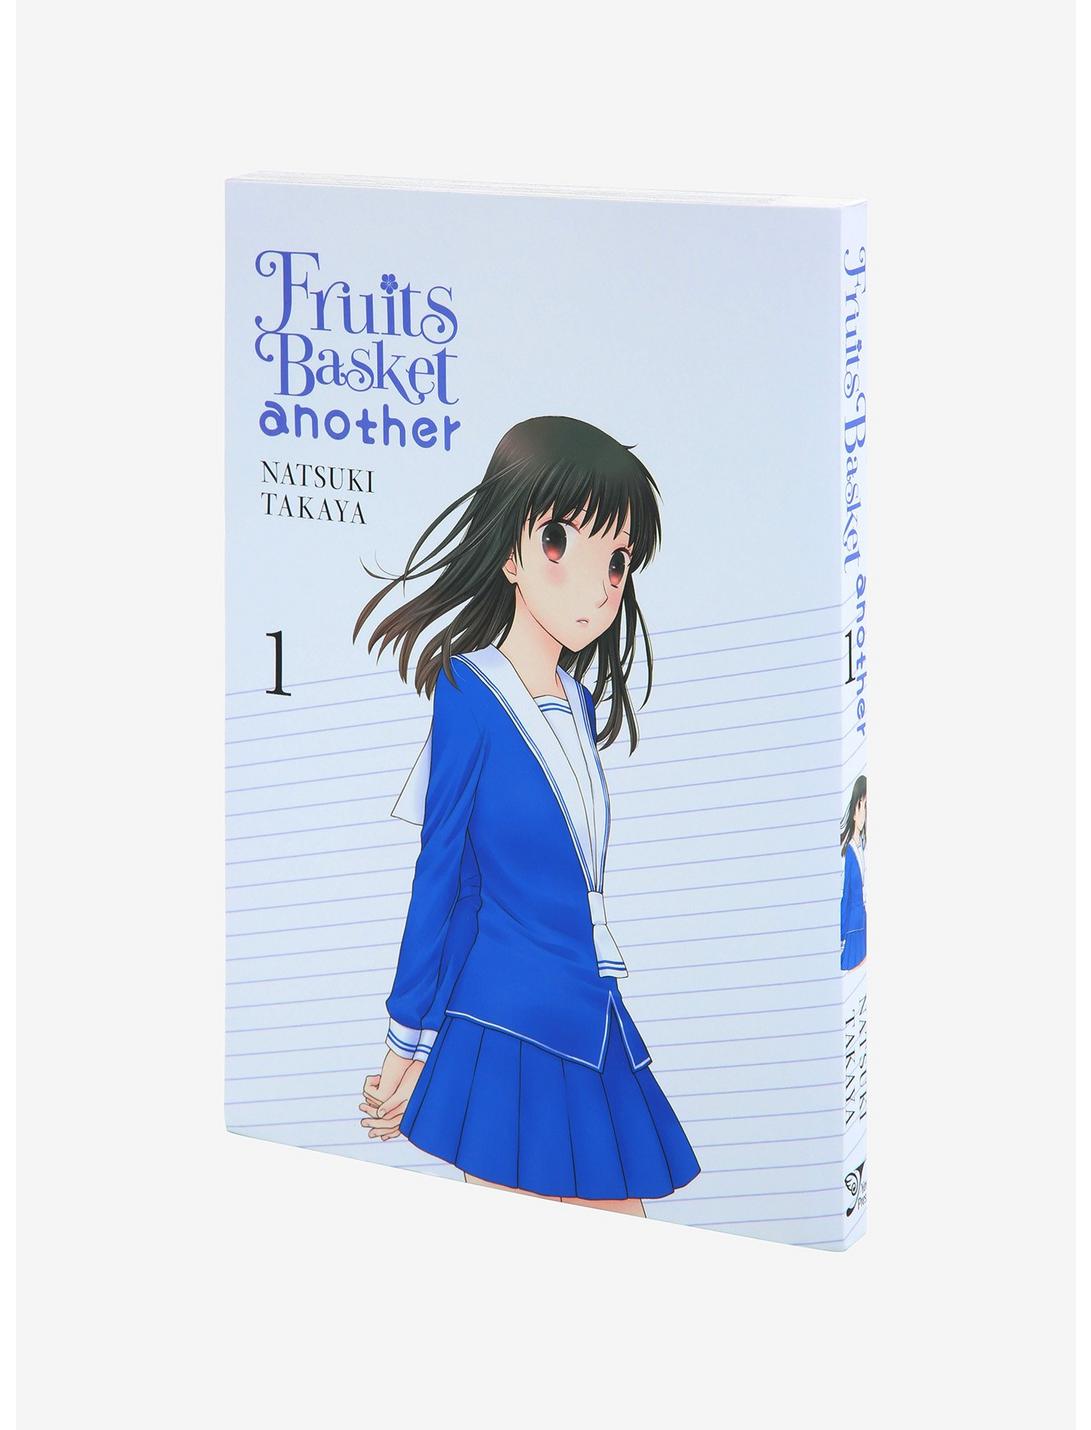 Fruits Basket Another Volume 1 Manga, , hi-res